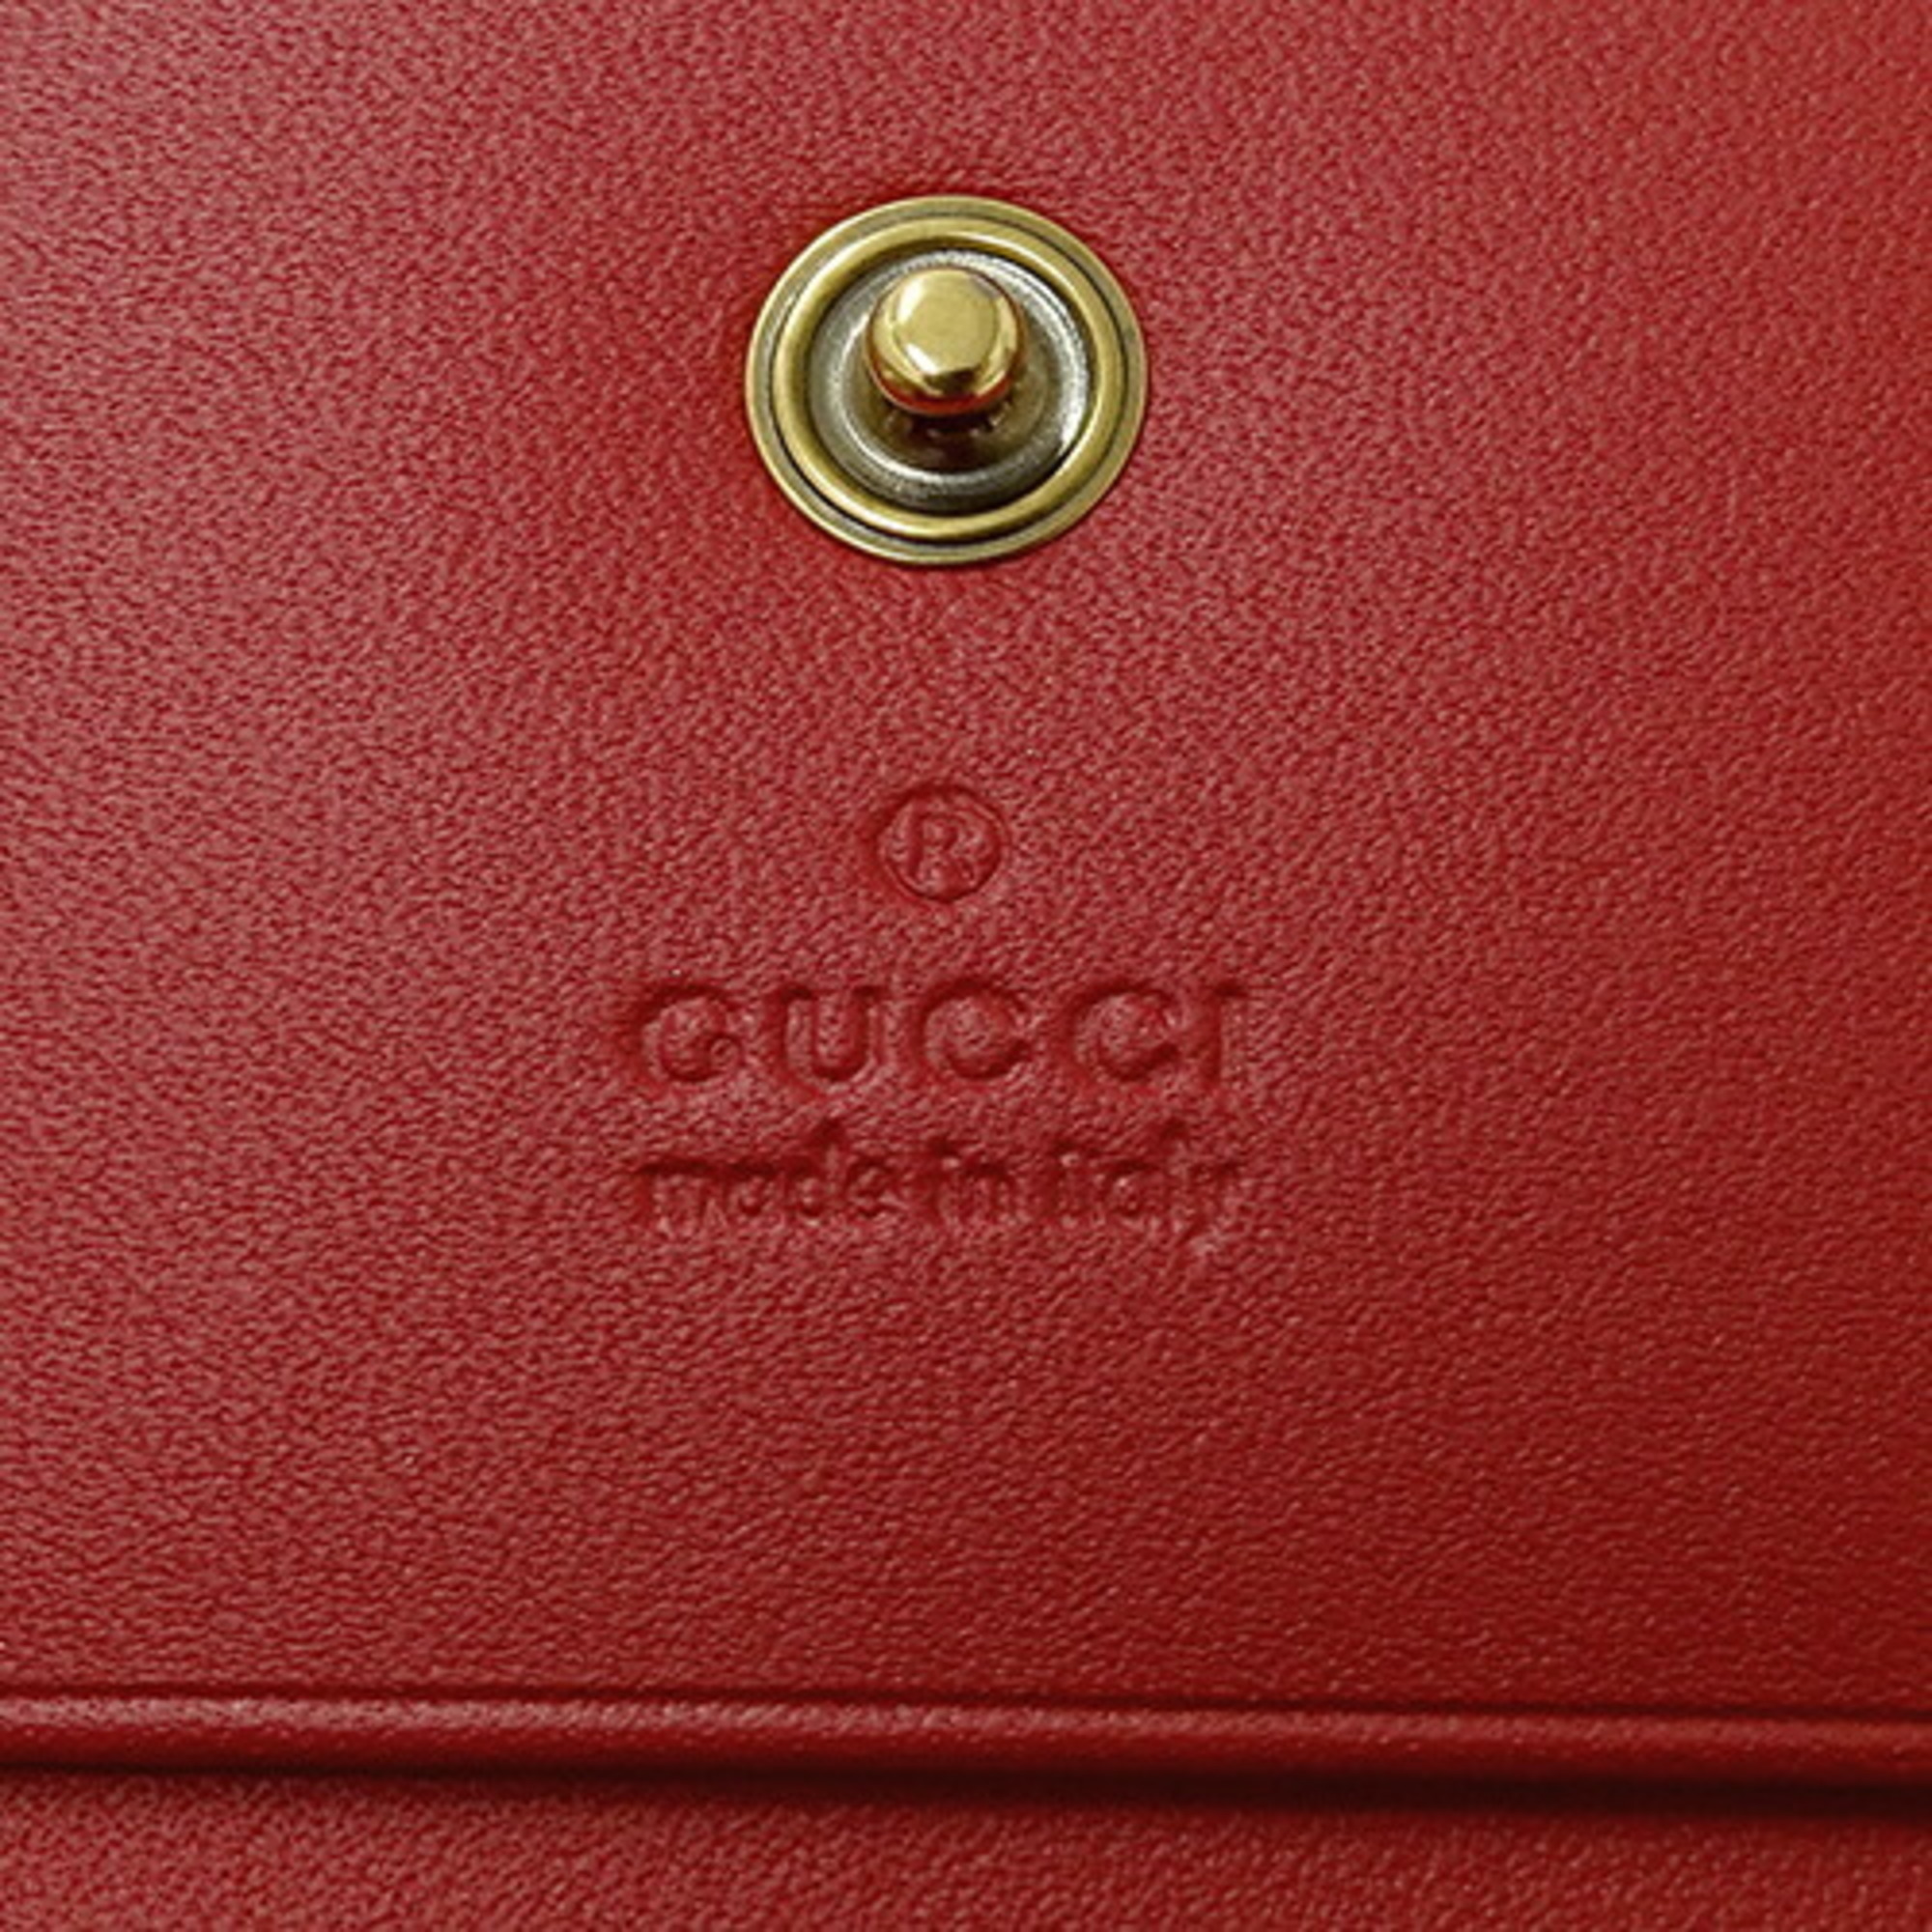 Gucci Women's Wallet Bi-fold Cherry GG Supreme Brown Red 476050 Compact